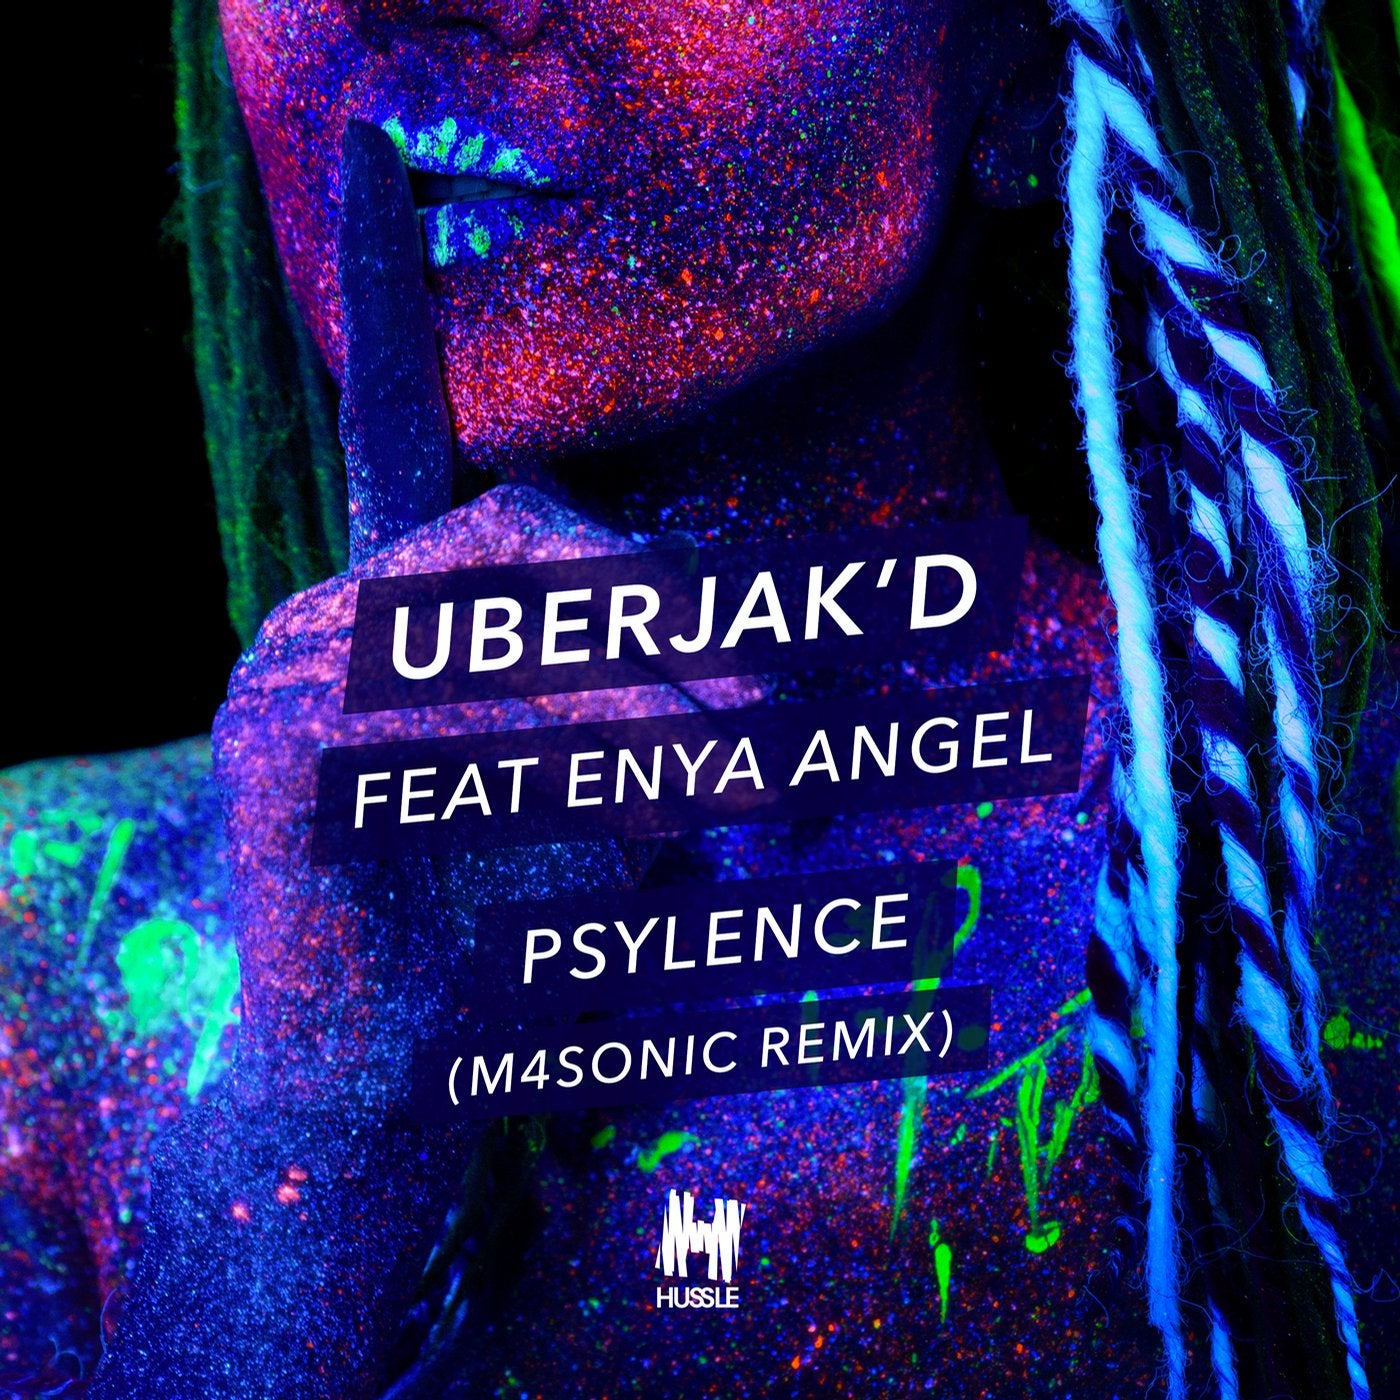 Psylence (M4SONIC Remix) feat. Enya Angel